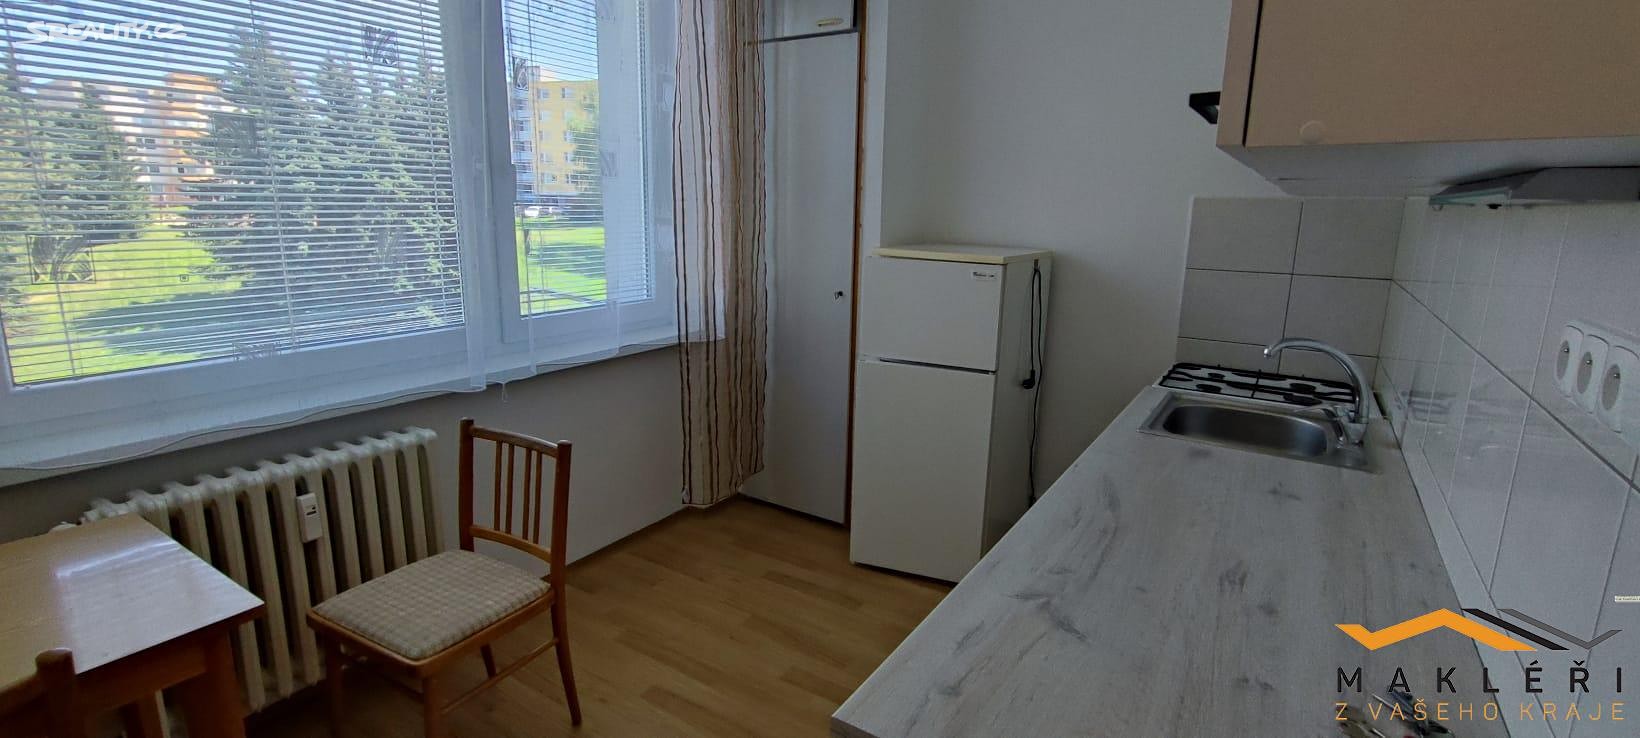 Pronájem bytu 1+1 40 m² (Loft), Březinova, Jihlava